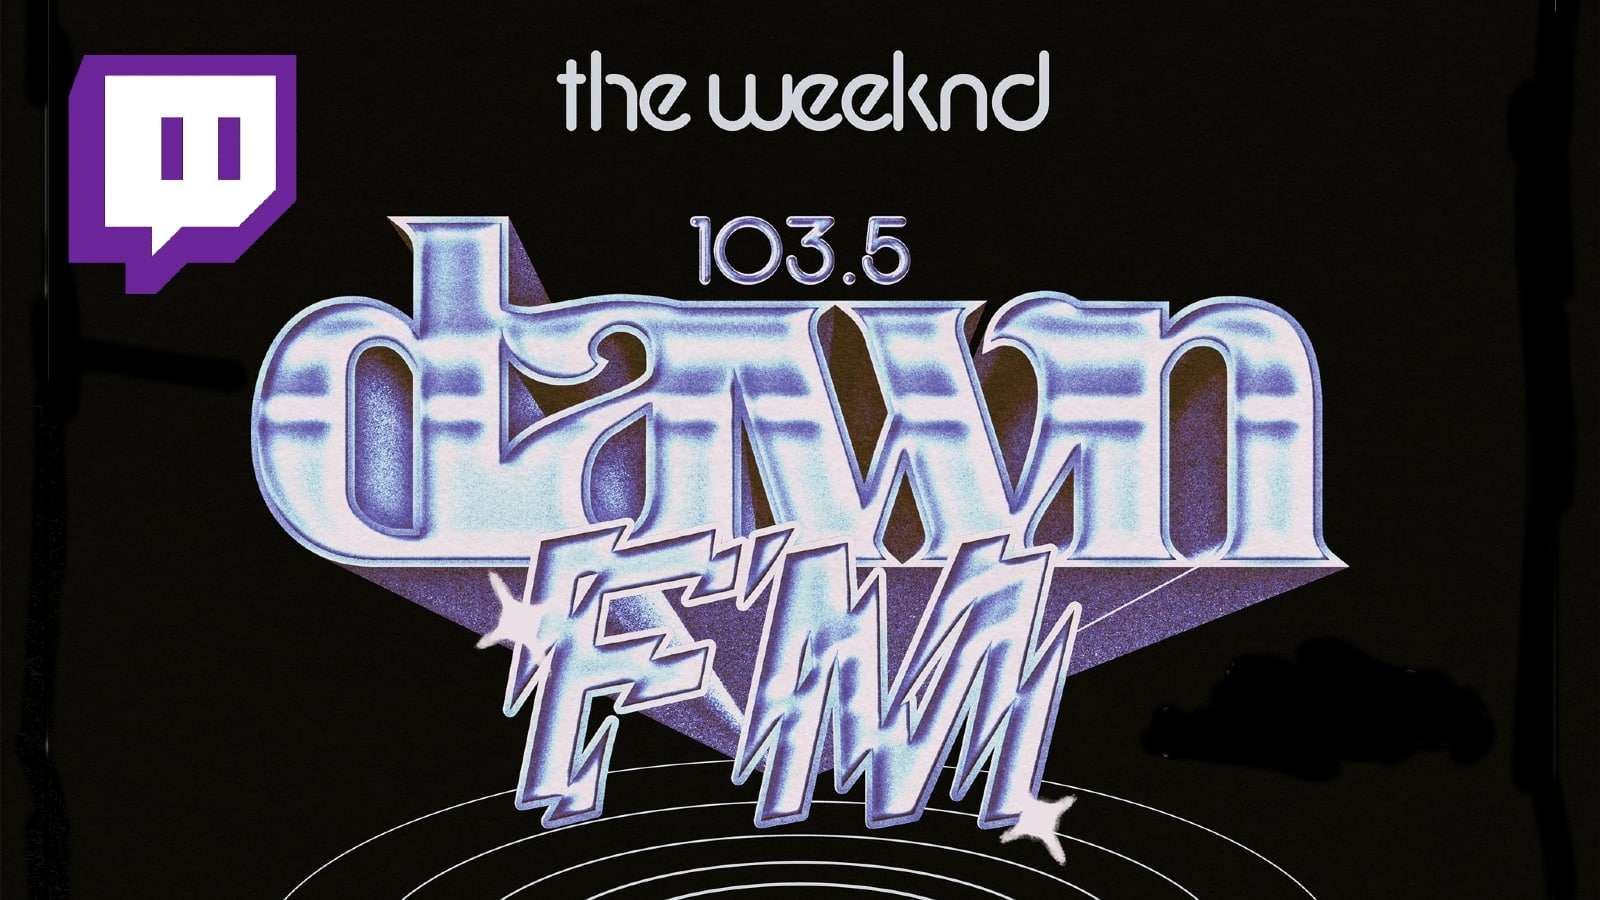 the weeknd dawn fm stream logo with twitch logo